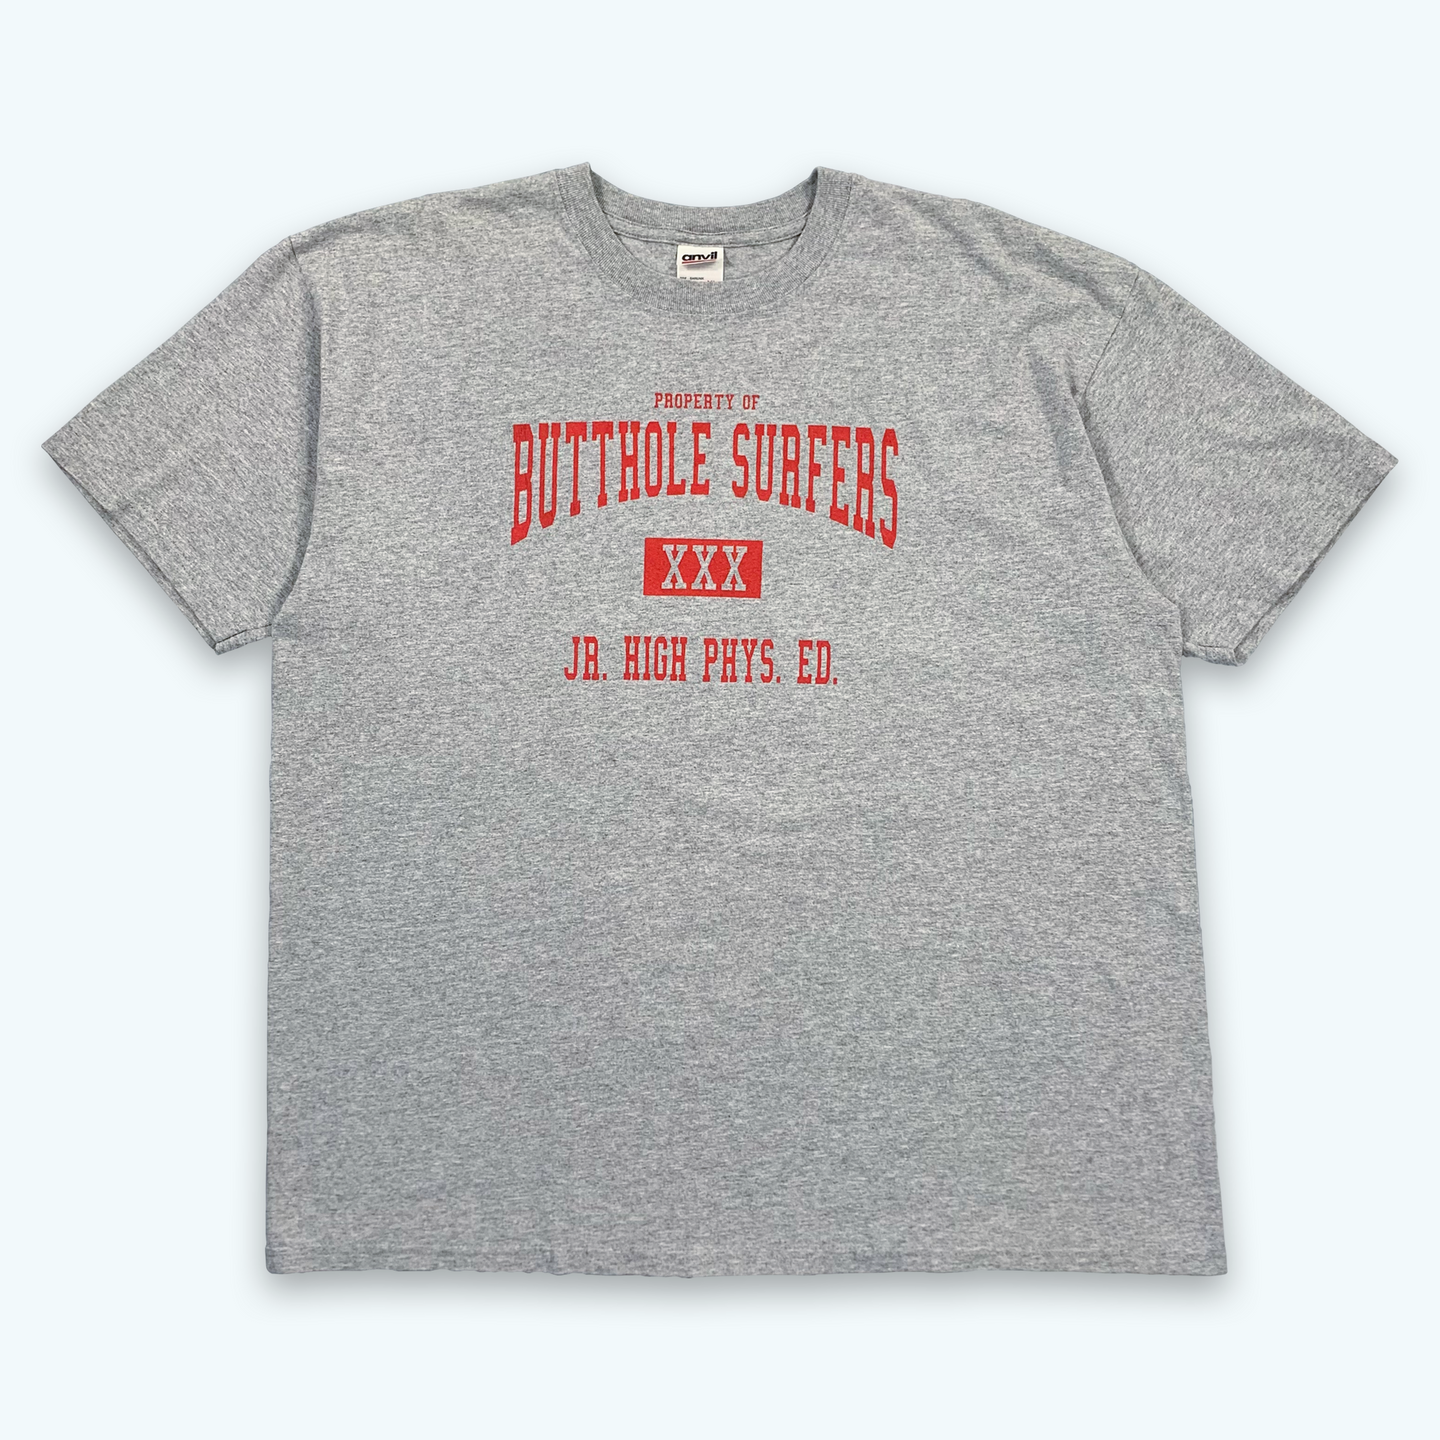 Butthole Surfers T-Shirt (Grey)